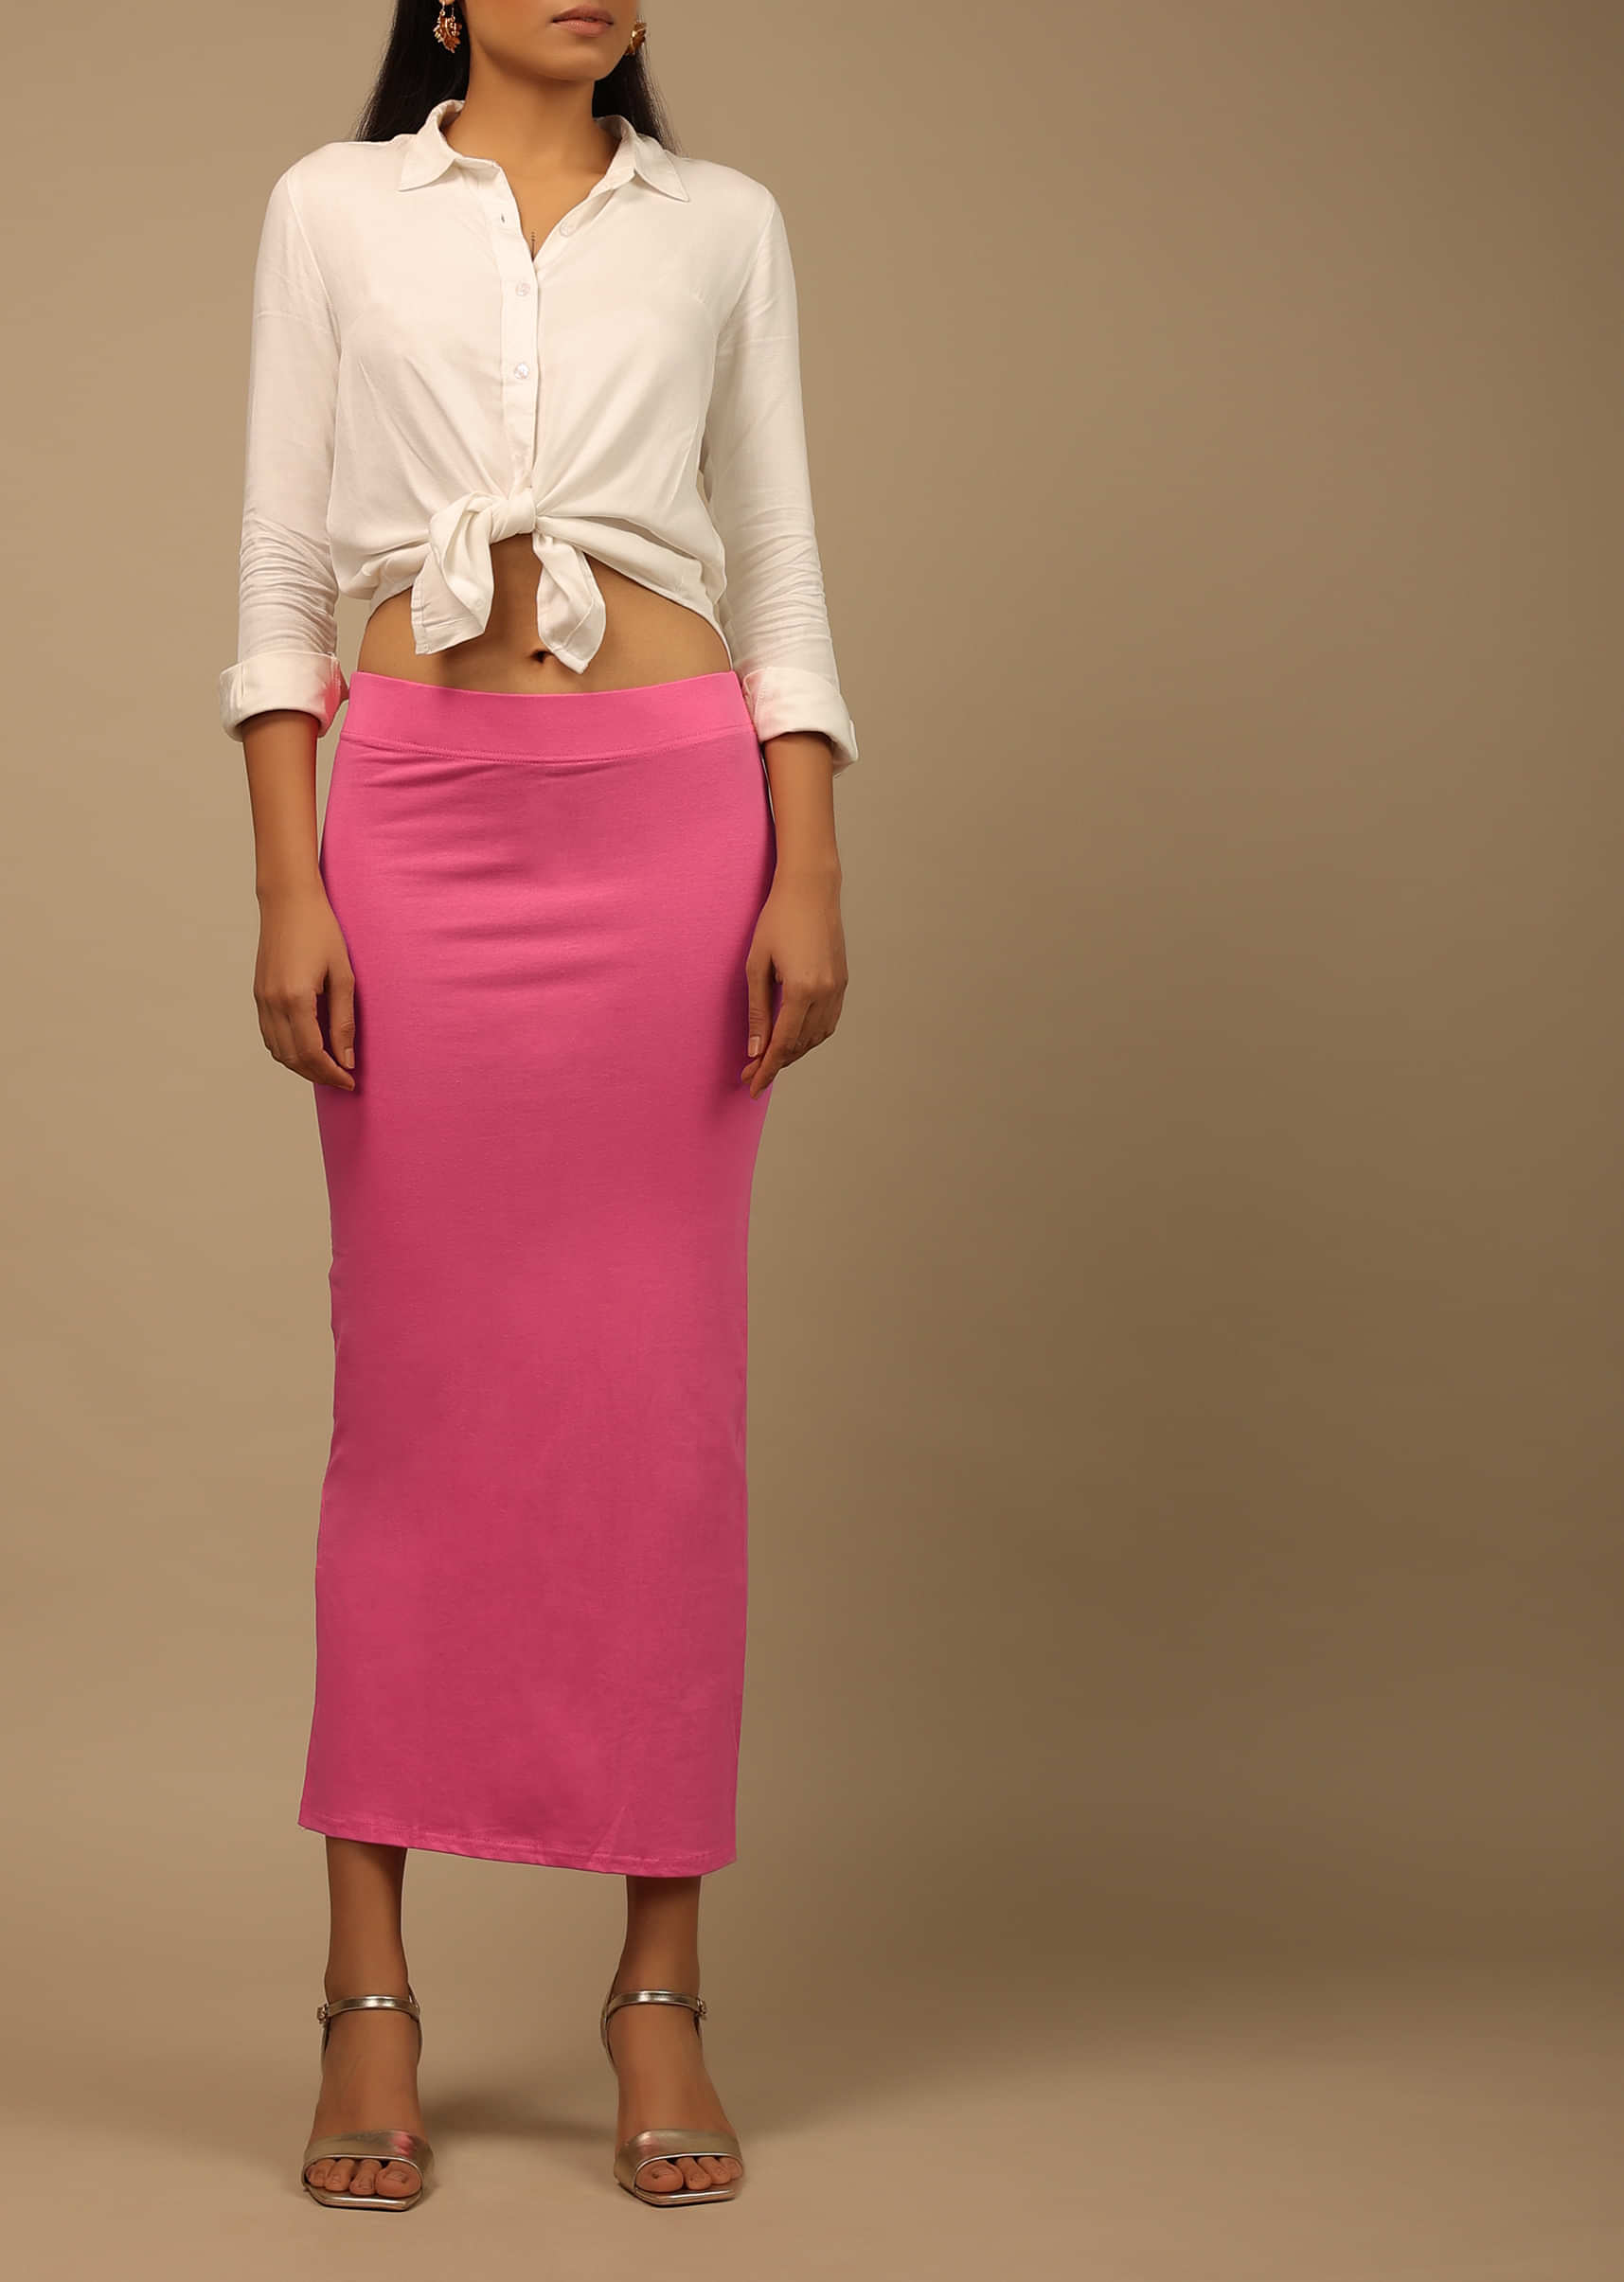 Cotton Stretchable Petticoat/ Shape-ware For Women